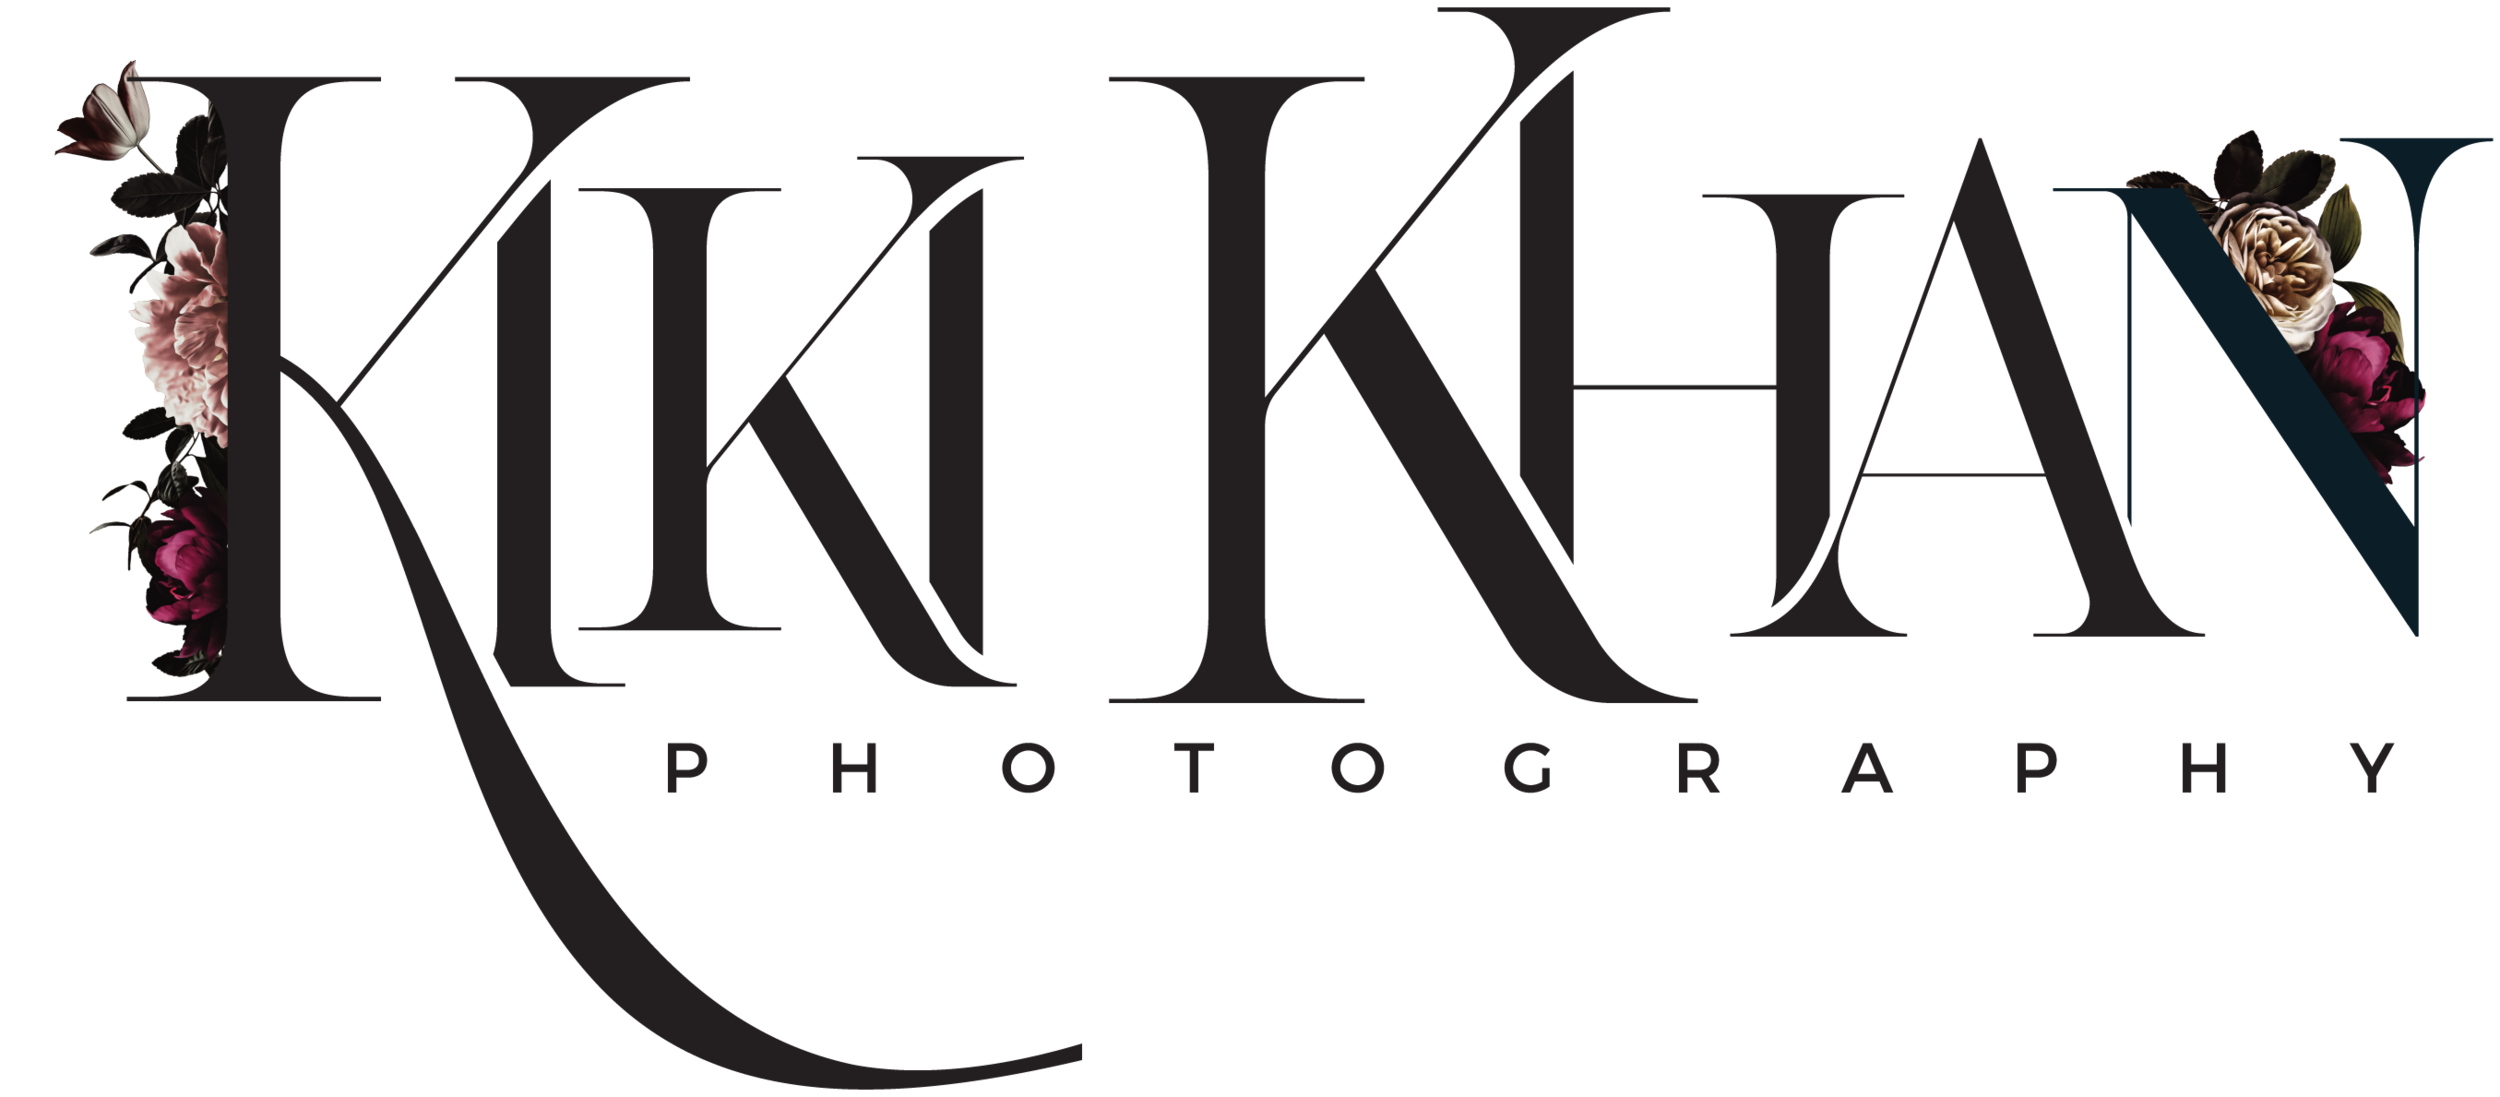 Kiki Khan Photography